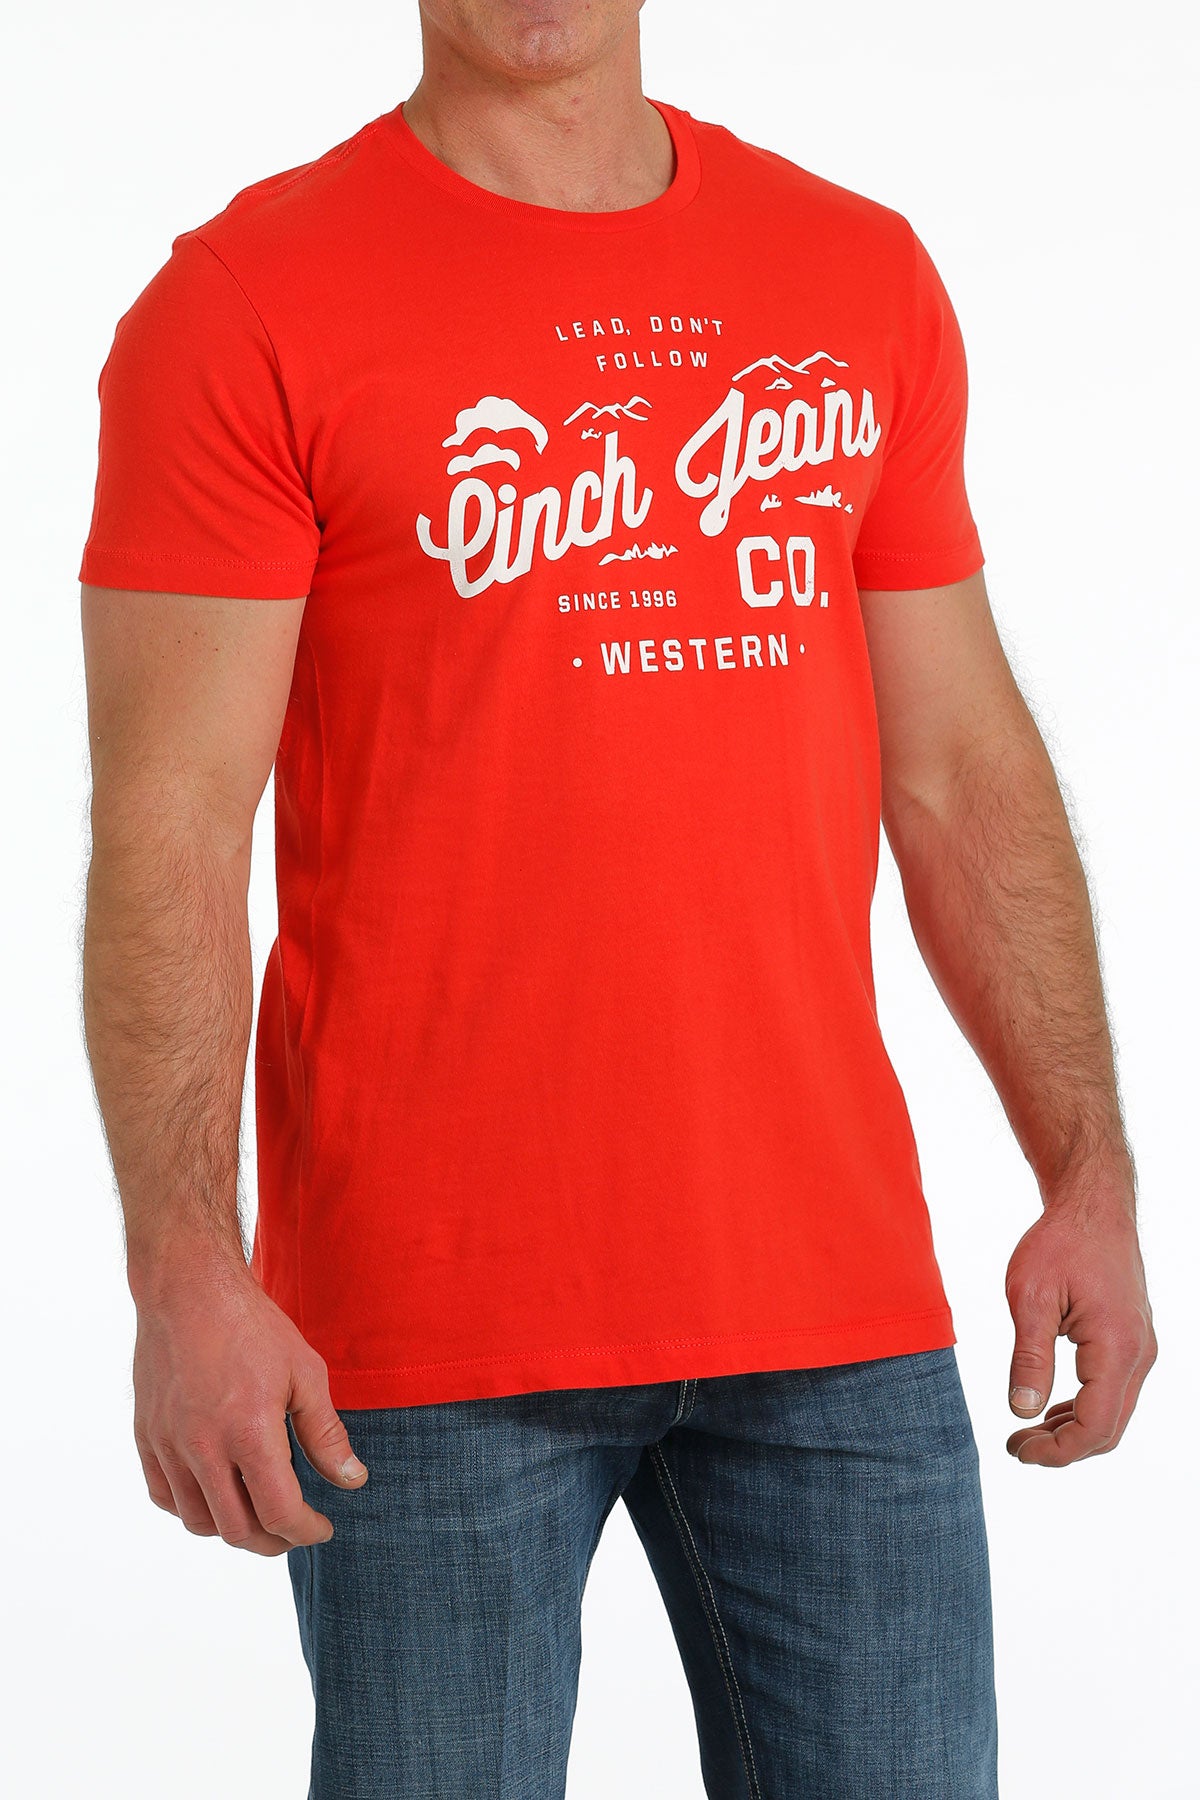 Cinch Men's "Lead, Don't Follow" Red T-Shirt